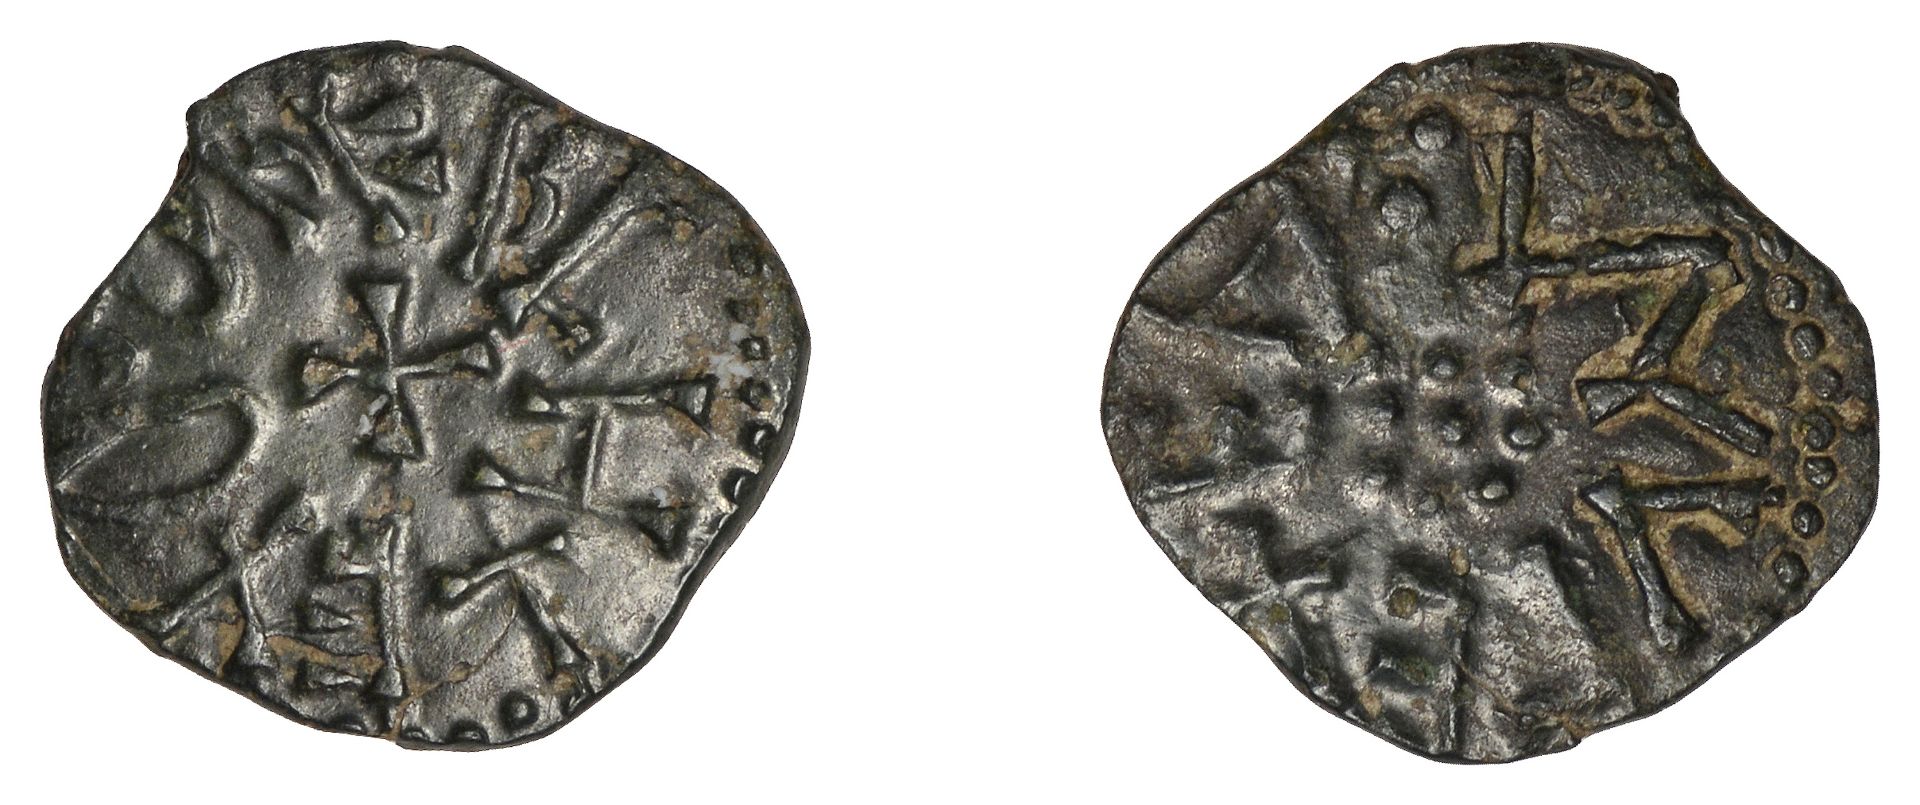 Kings of Northumbria, Osberht (849-67), Styca, Eanwulf, osbebchtex around cross, rev. ea:.nn...